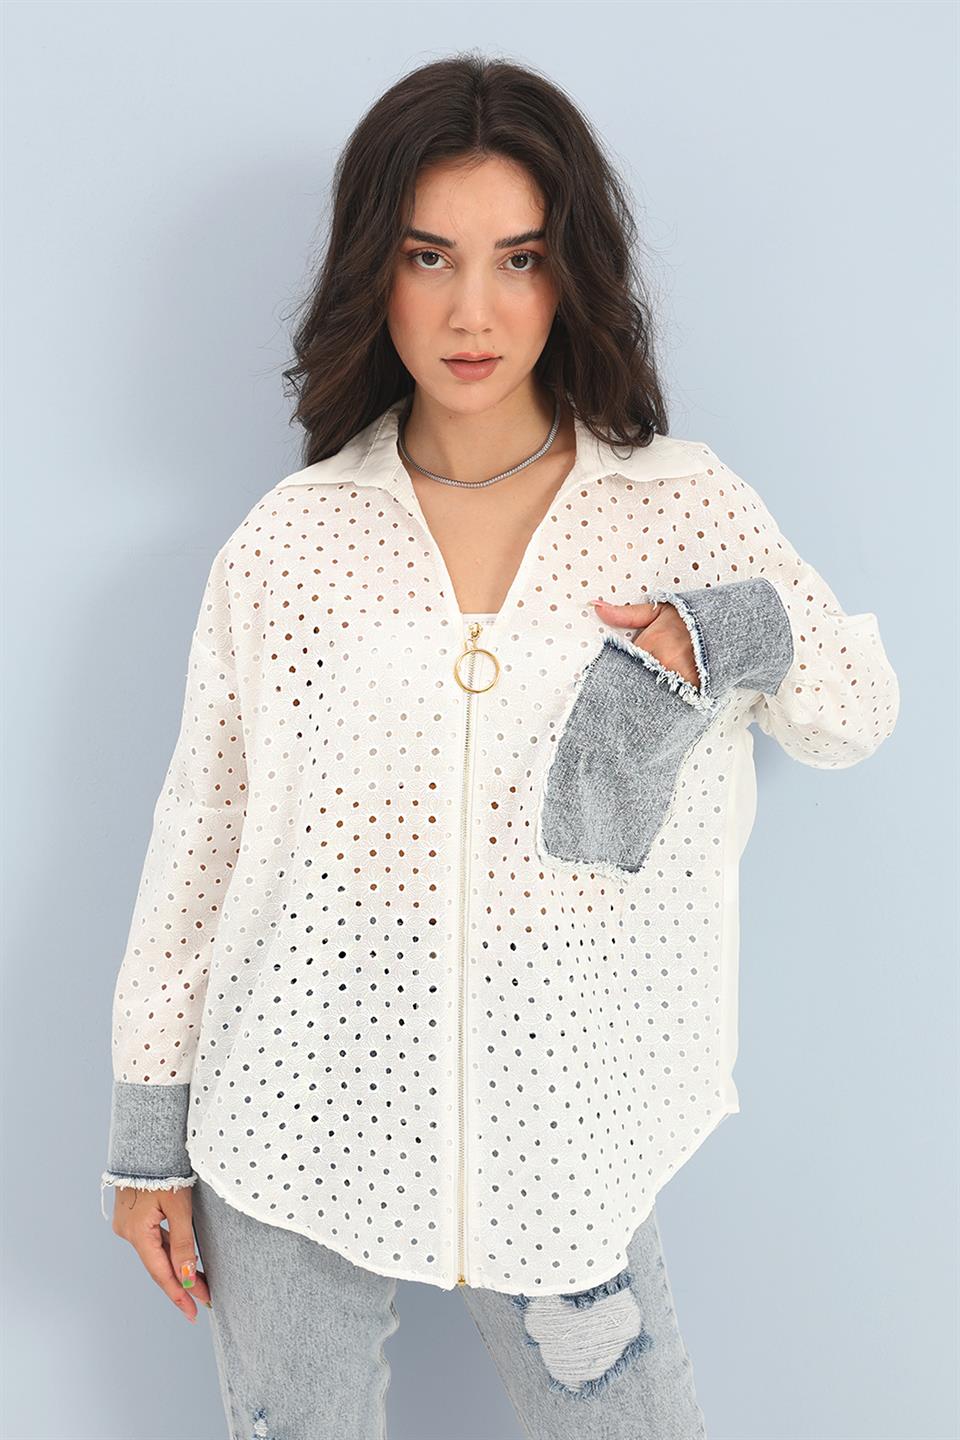 Women's Shirt Embroidered Denim Garnish Floral Pattern - White - STREETMODE™